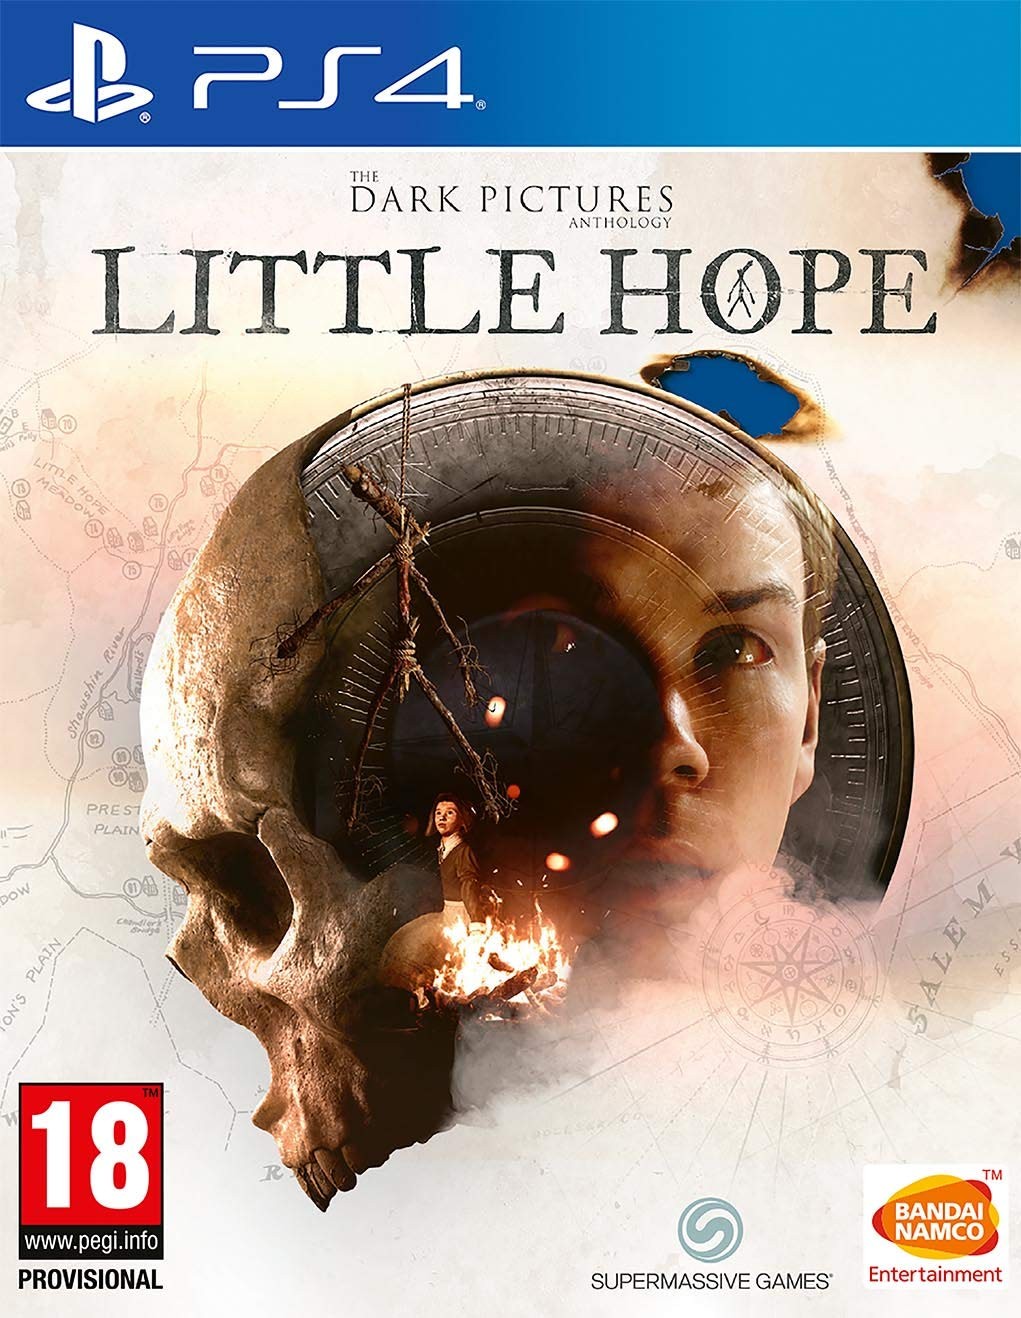 The Dark Pictures: Little Hope: постер N173308